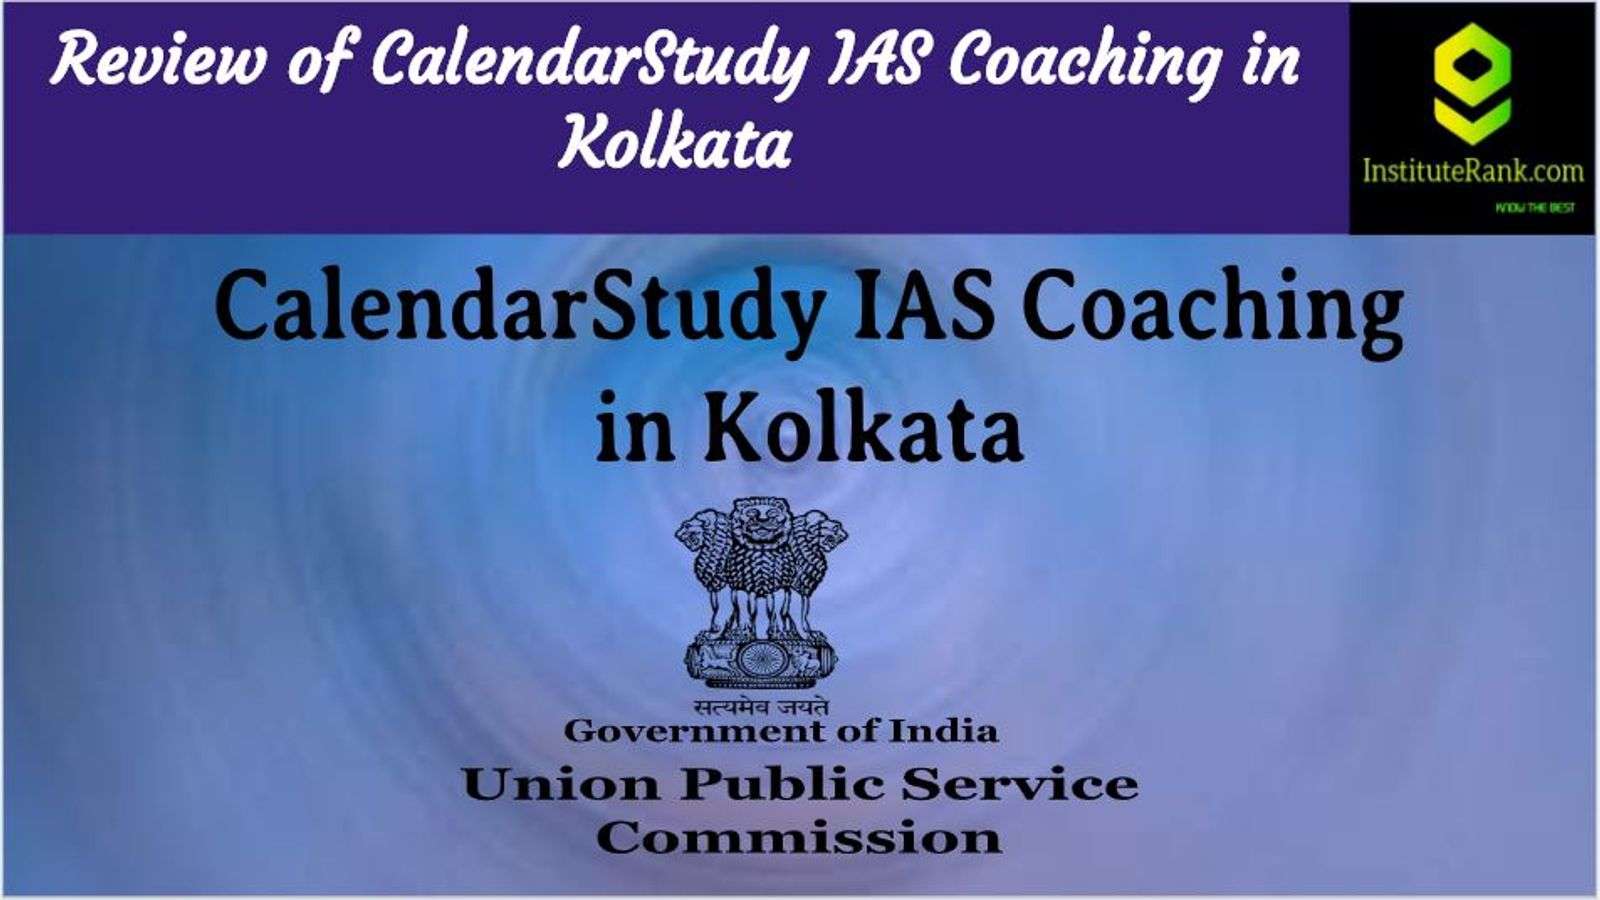 Calendarstudy IAS Coaching Kolkata Reviews